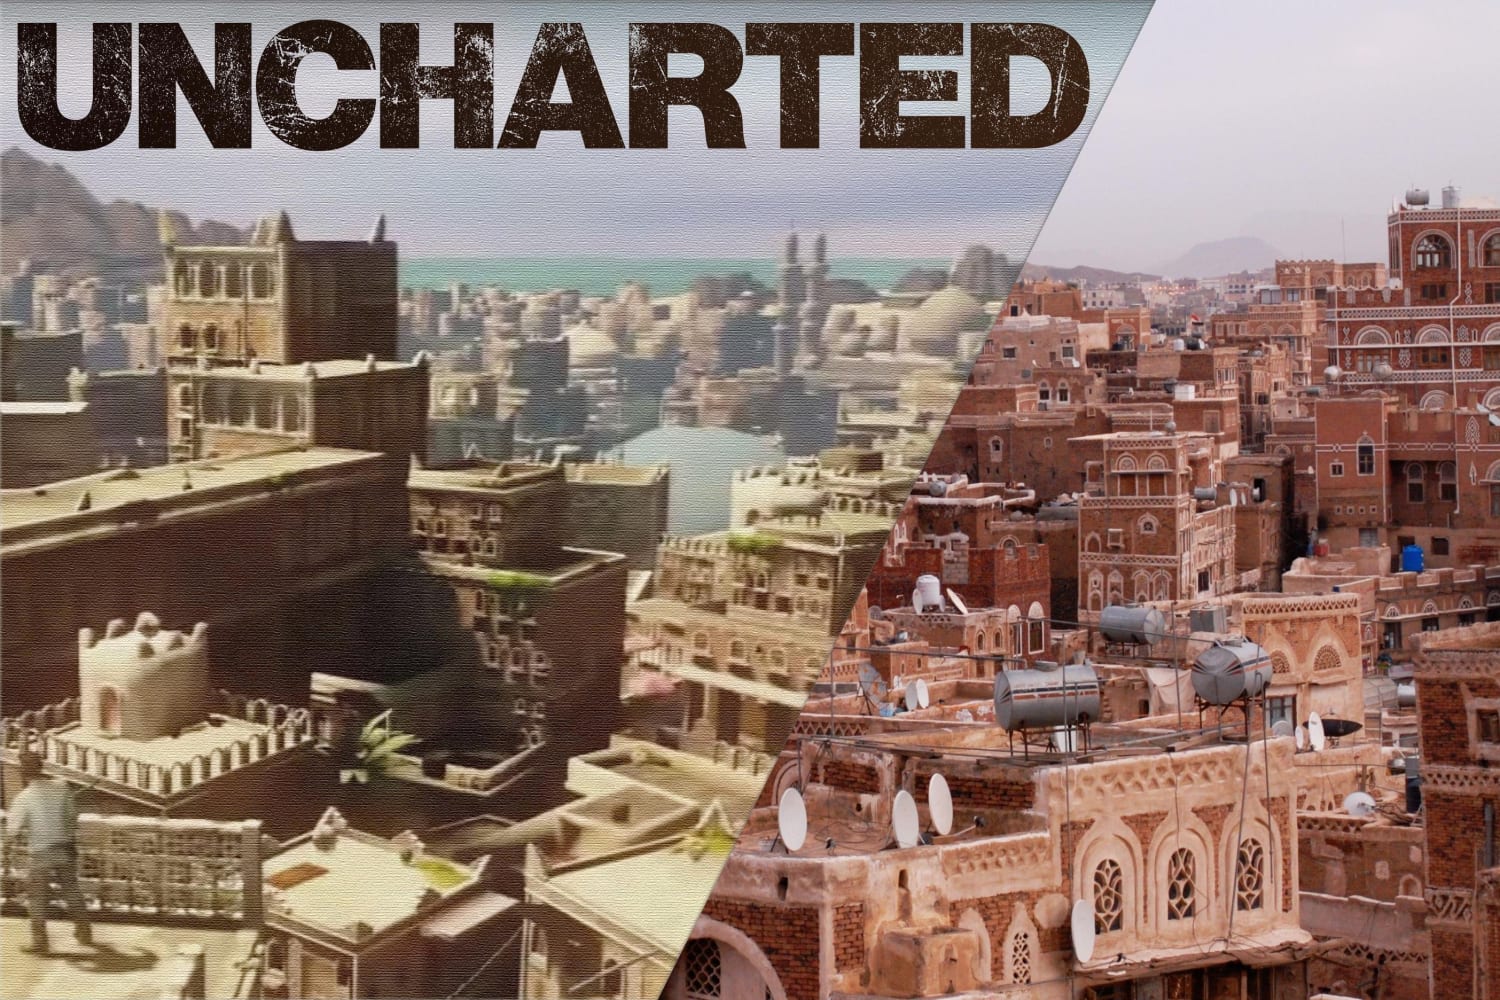 Uncharted 4': A Close Look At The New Nathan Drake Design